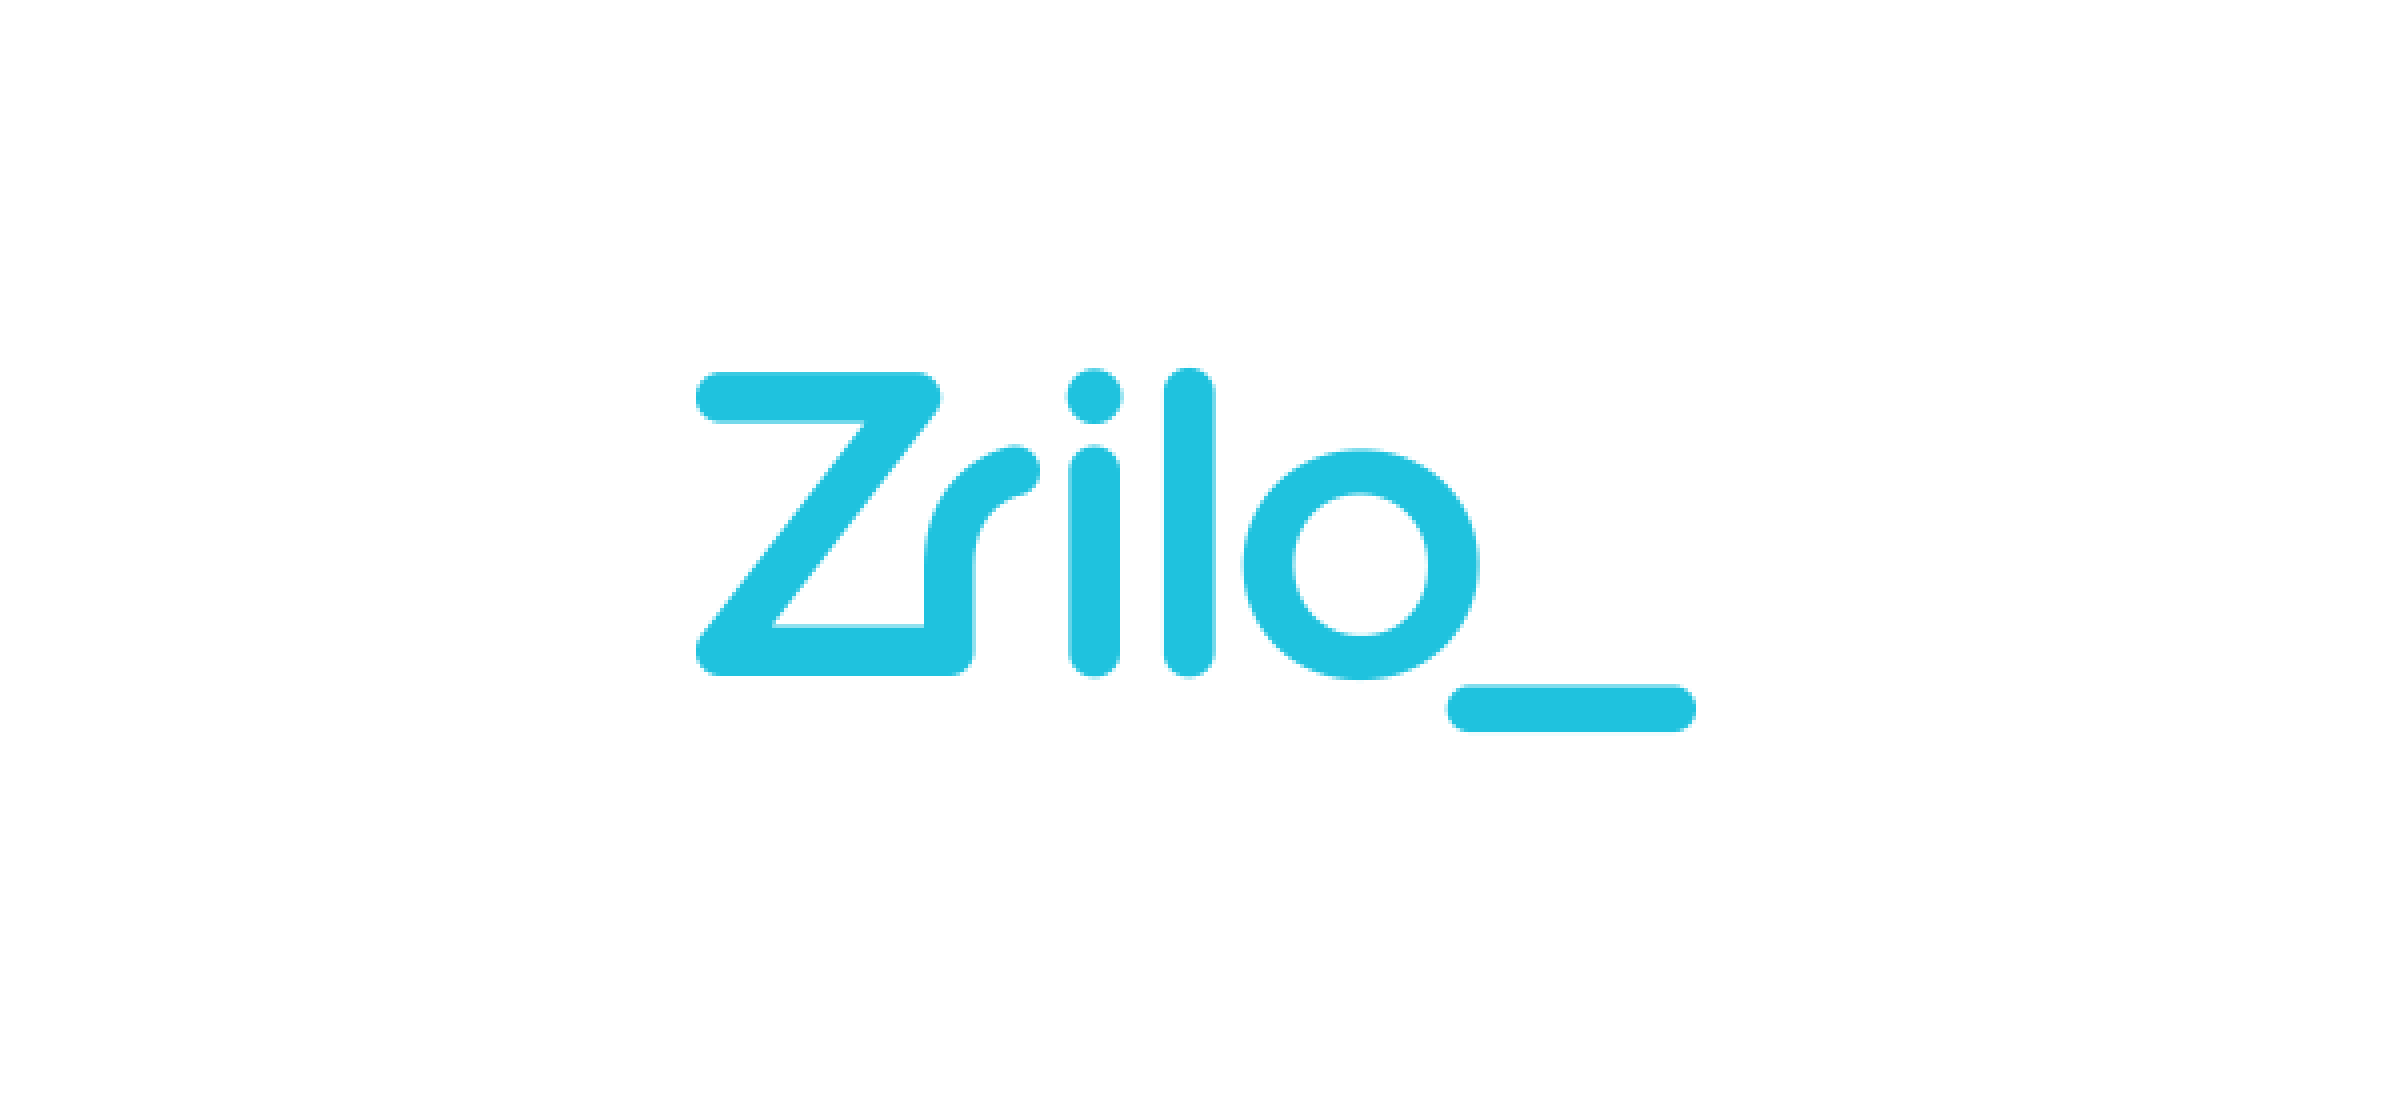 The Zrilo logo